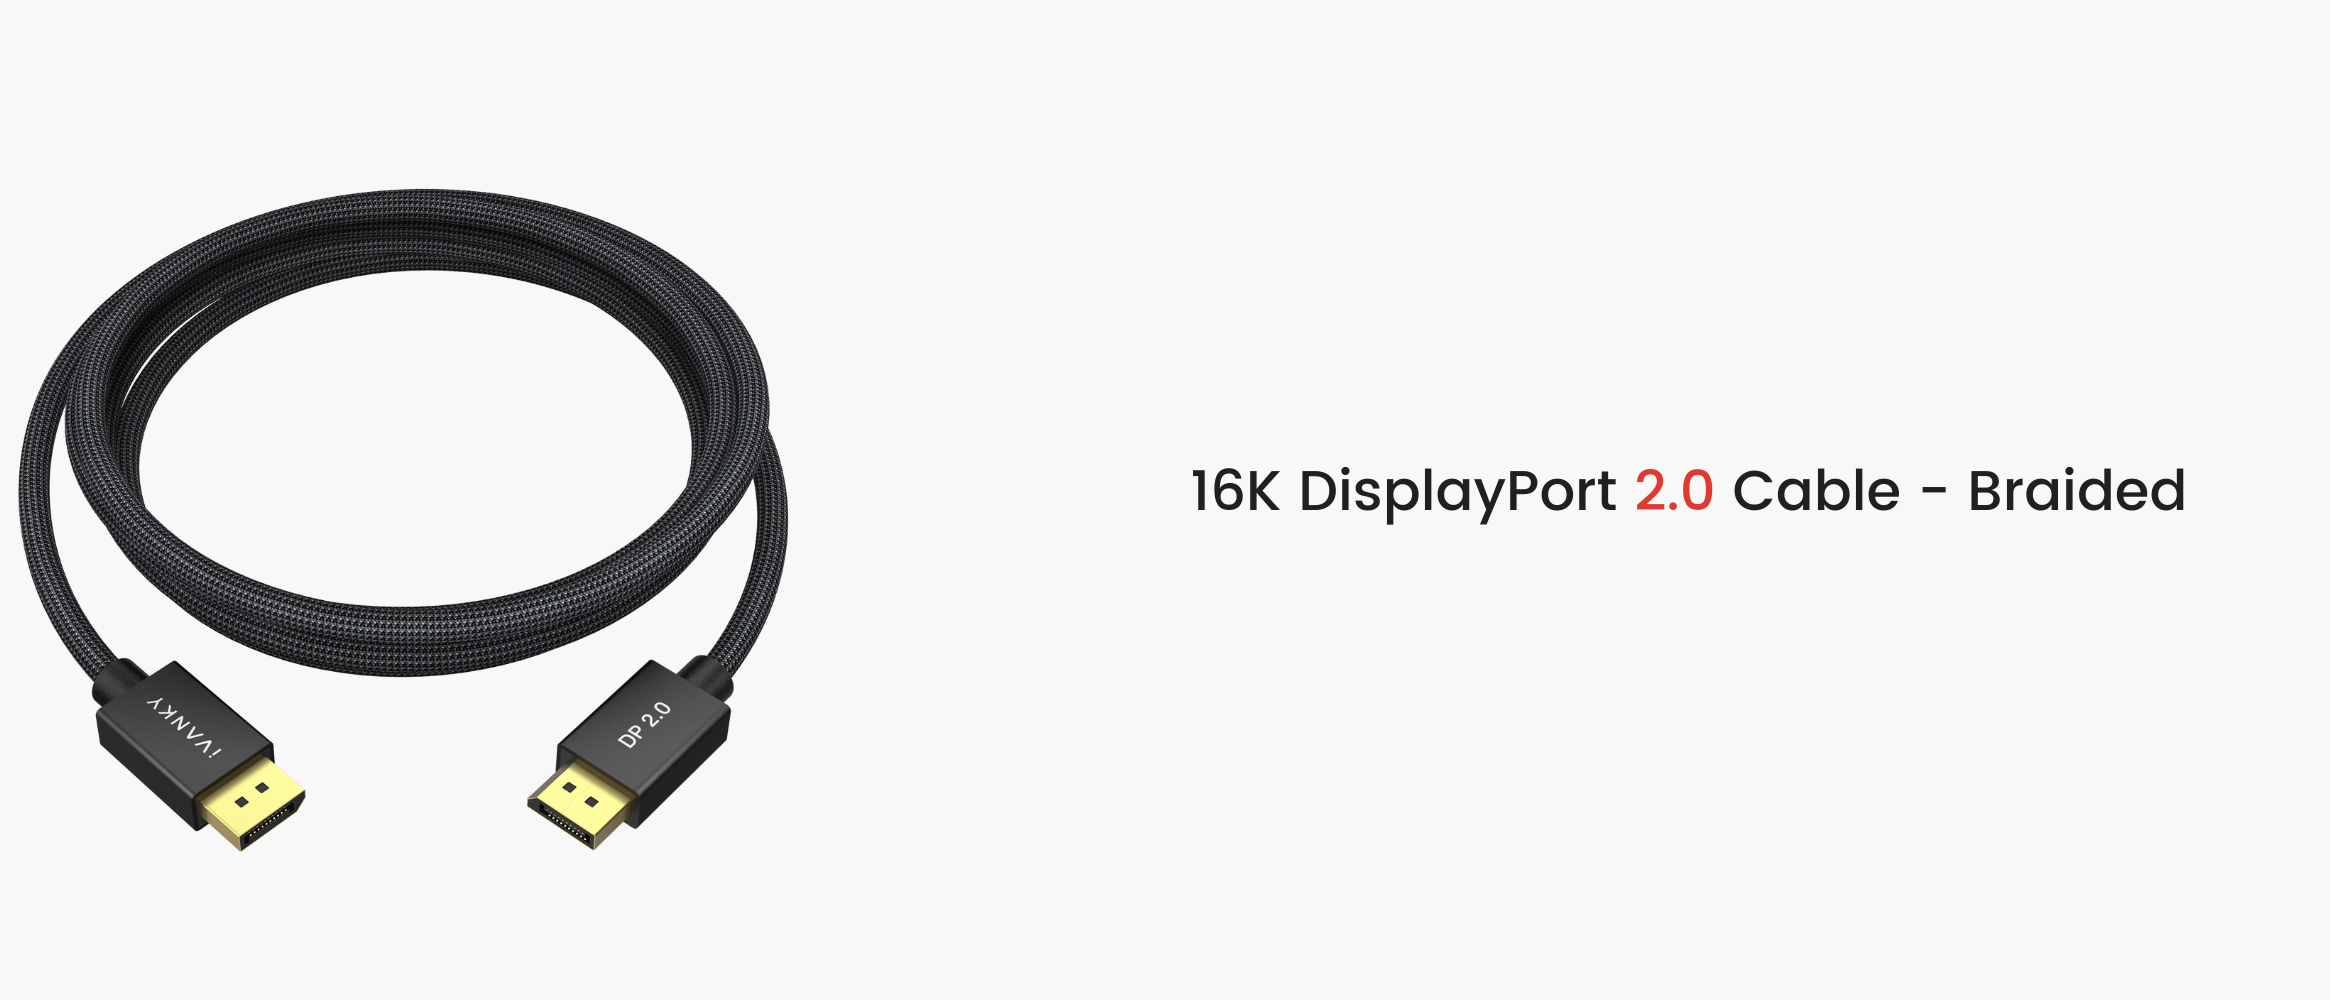 16K DisplayPort 2.0 Cable